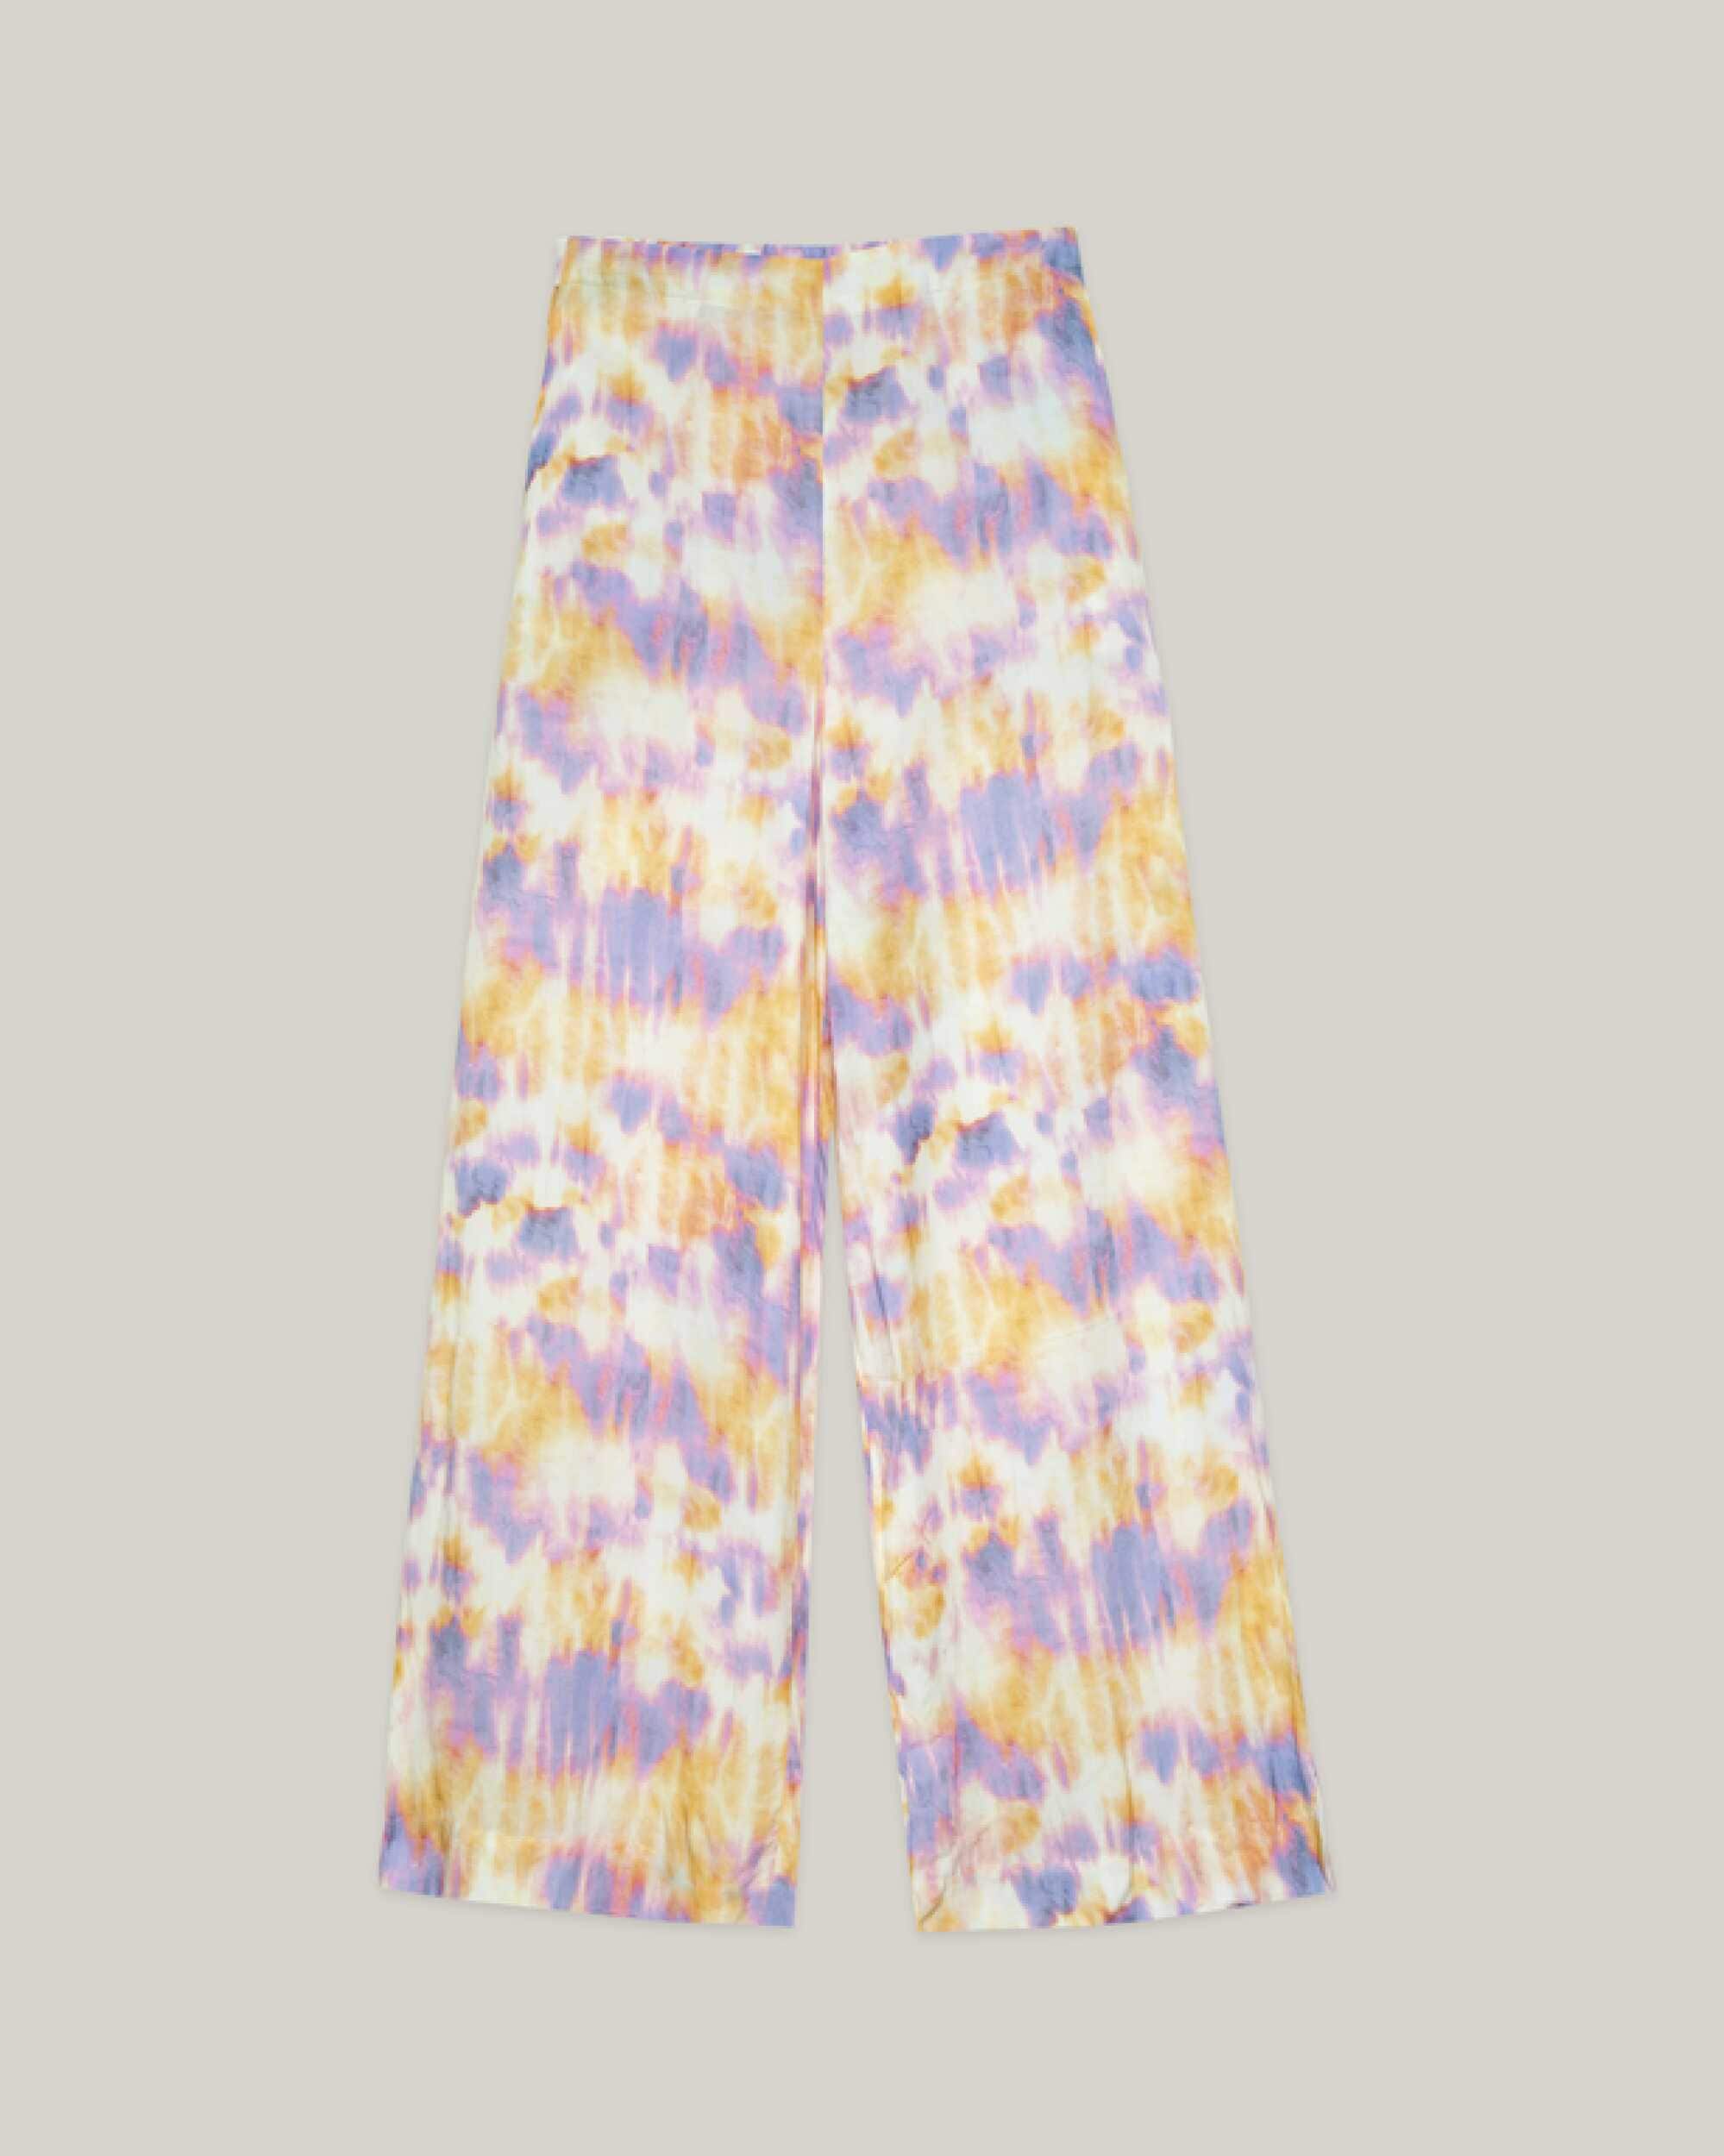 Brava Fabrics Pants Tie Dye Pant Lilac bæredygtig mode etisk mode